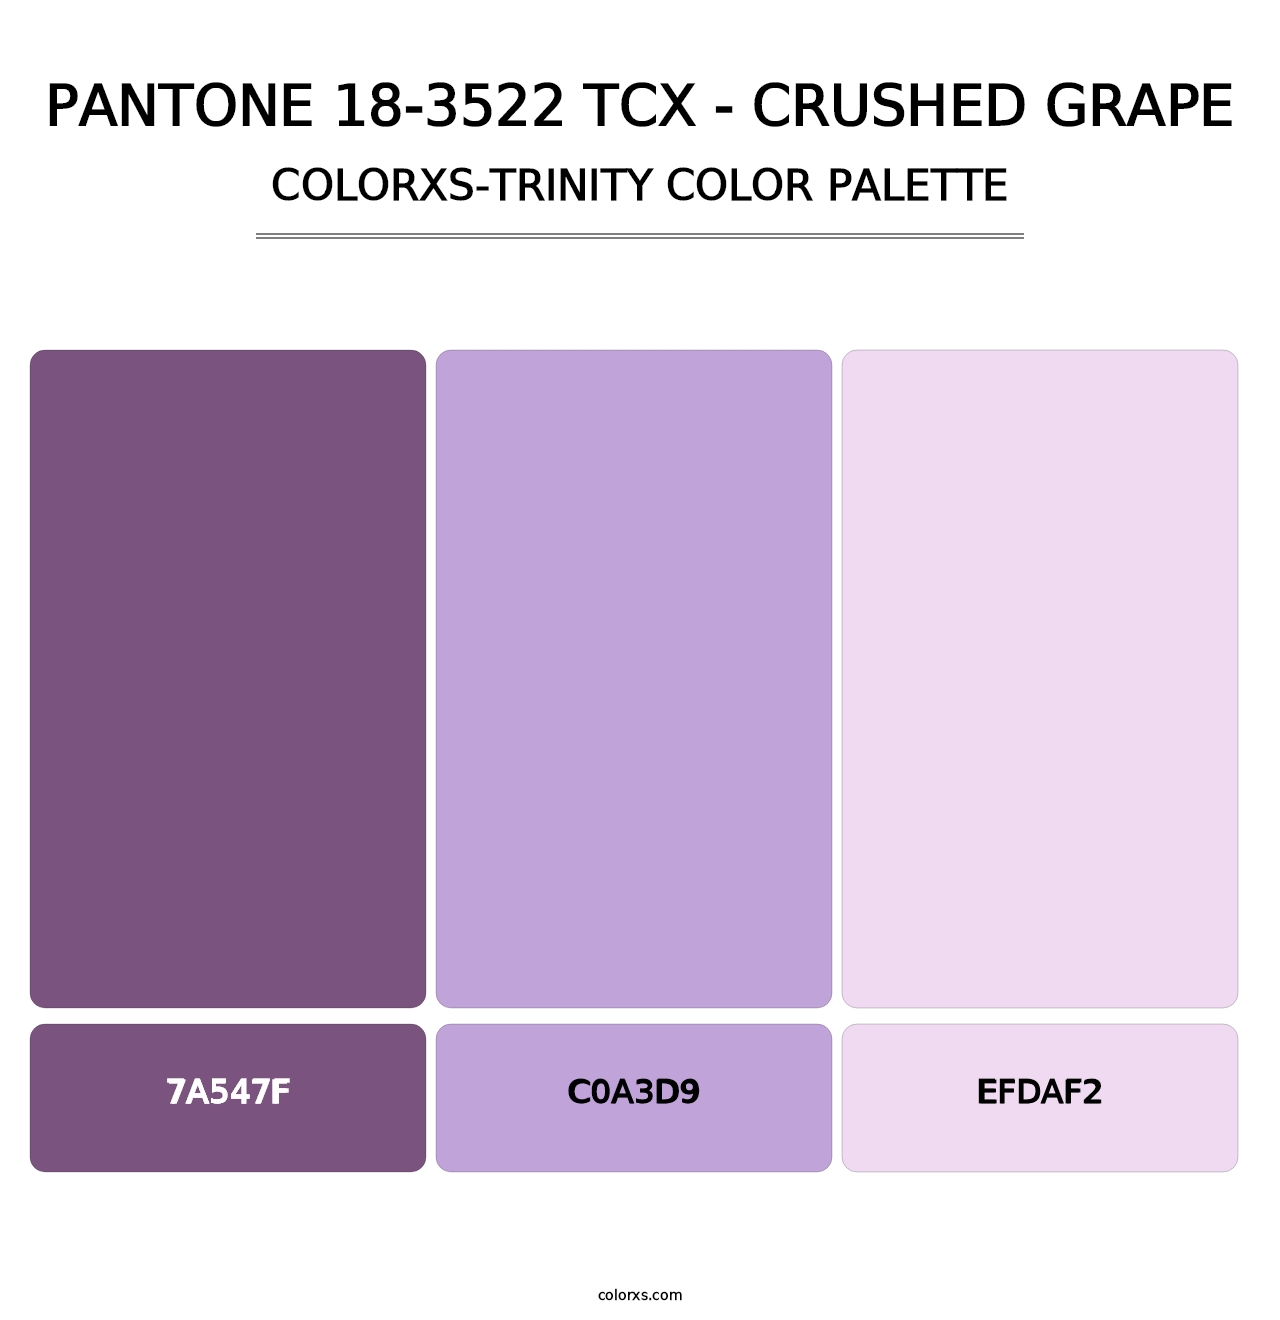 PANTONE 18-3522 TCX - Crushed Grape - Colorxs Trinity Palette